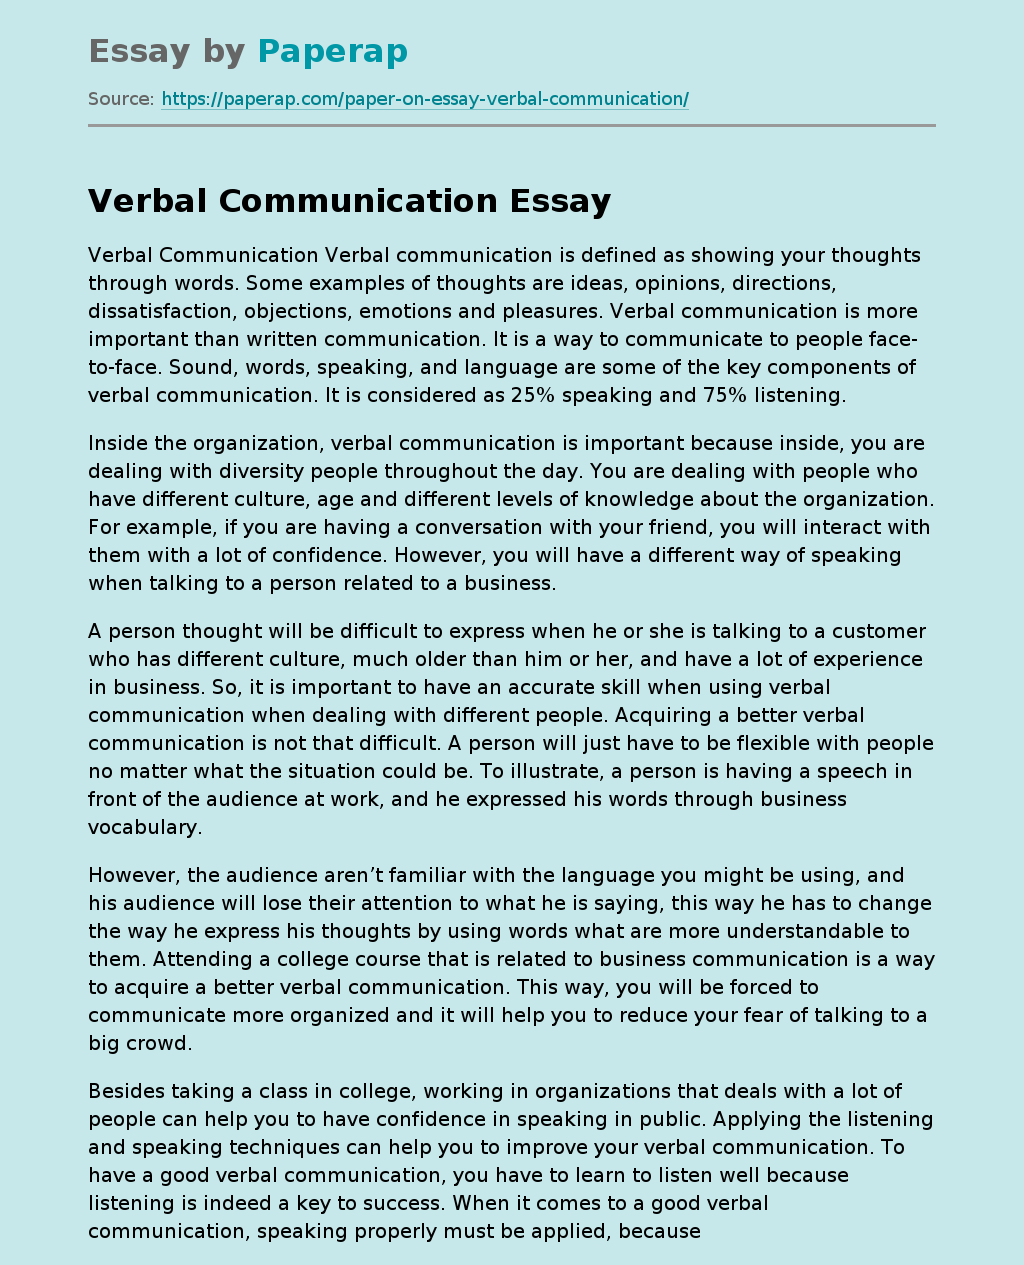 essay of communication skills